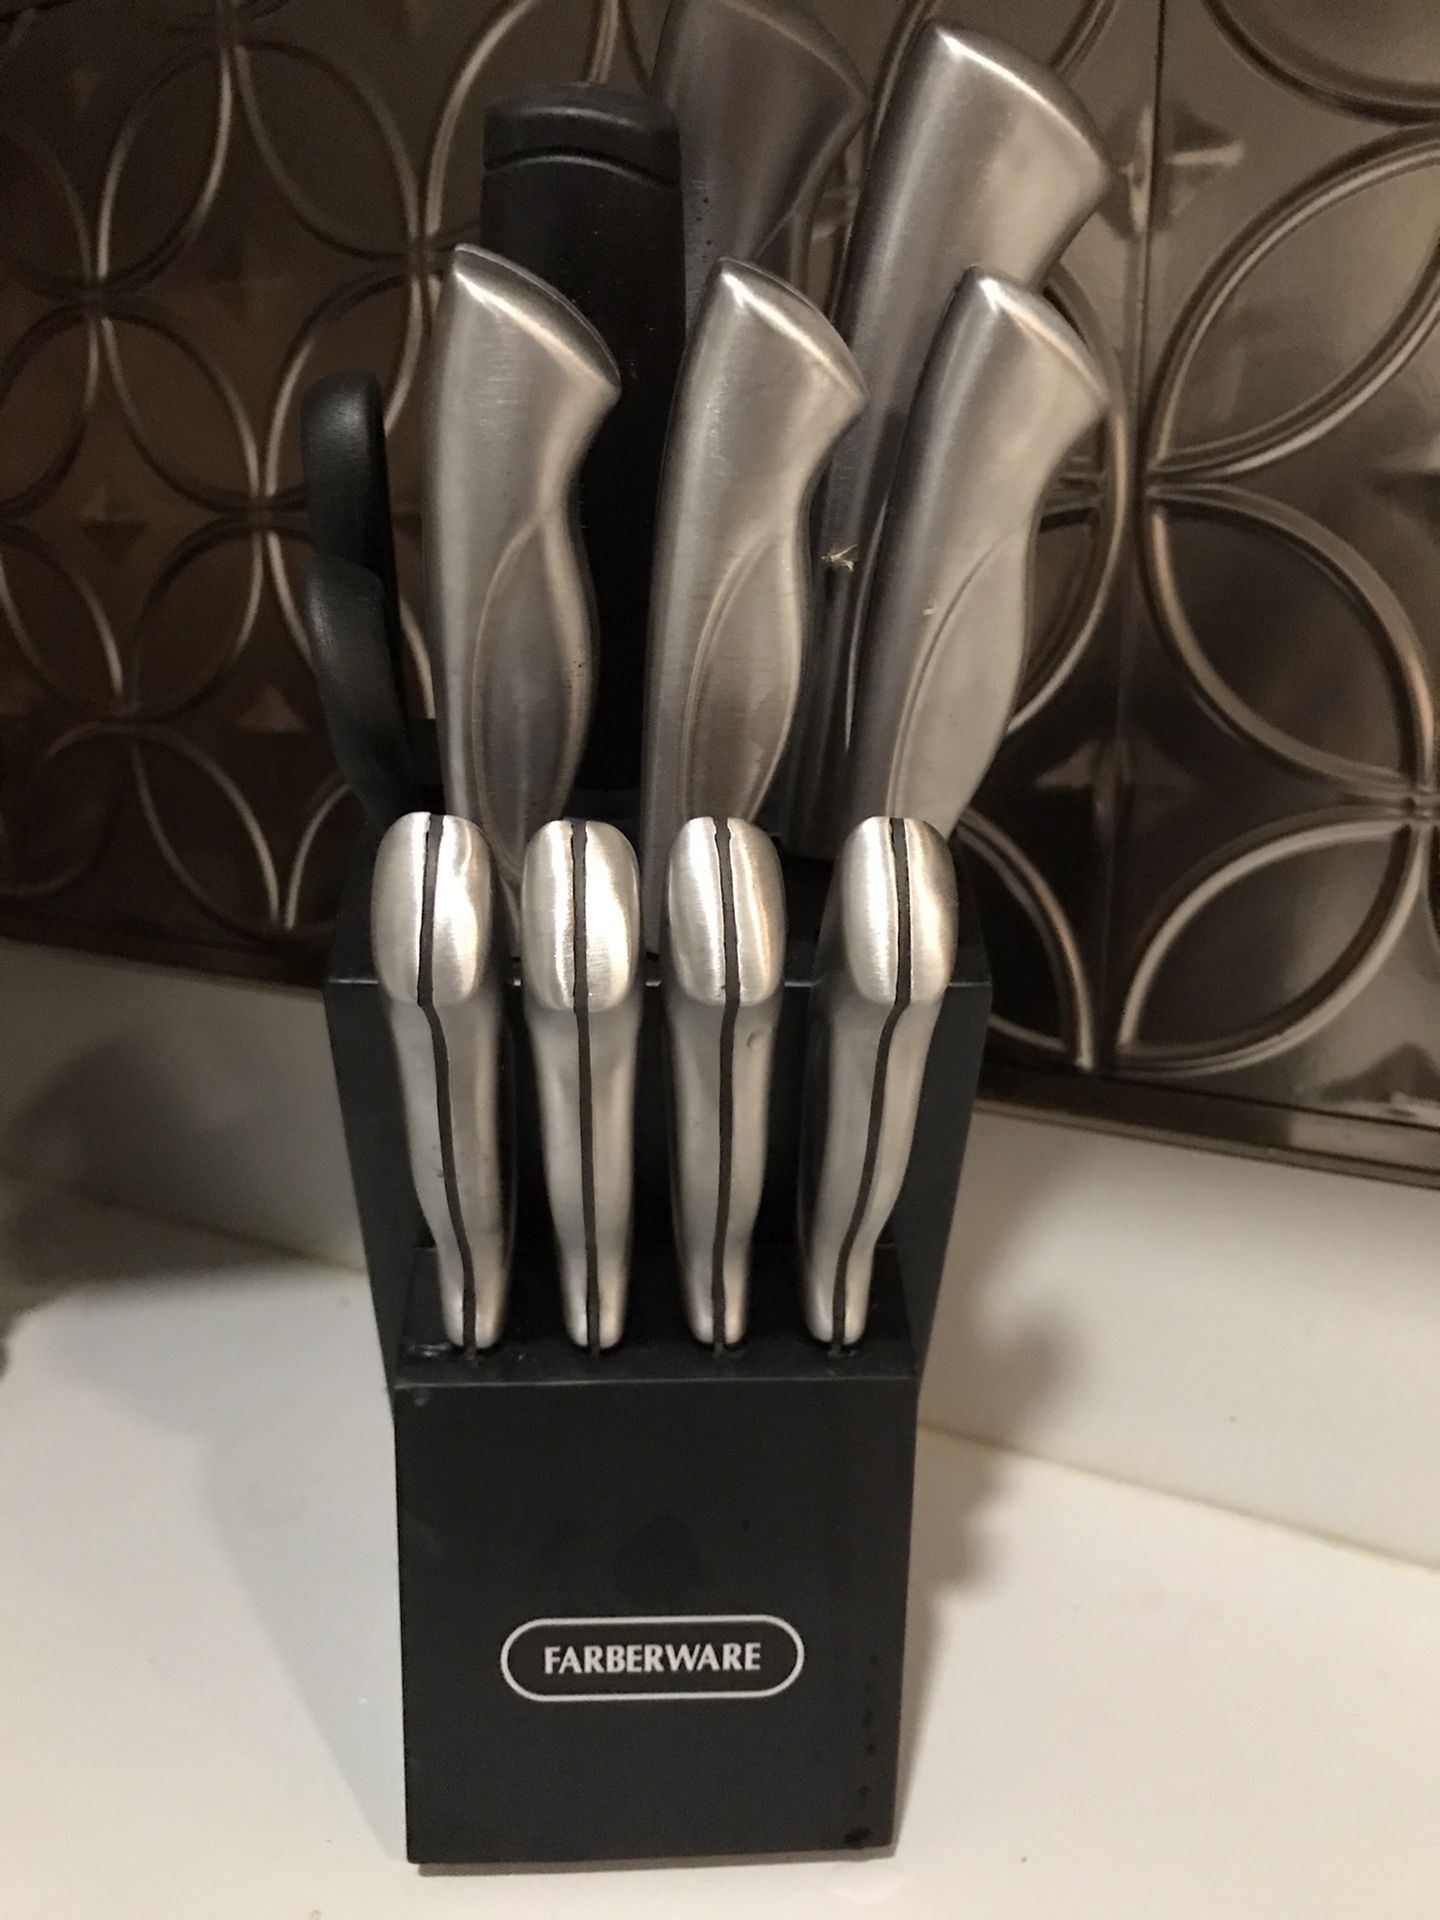 FARBERWARE 16 knife set with holder